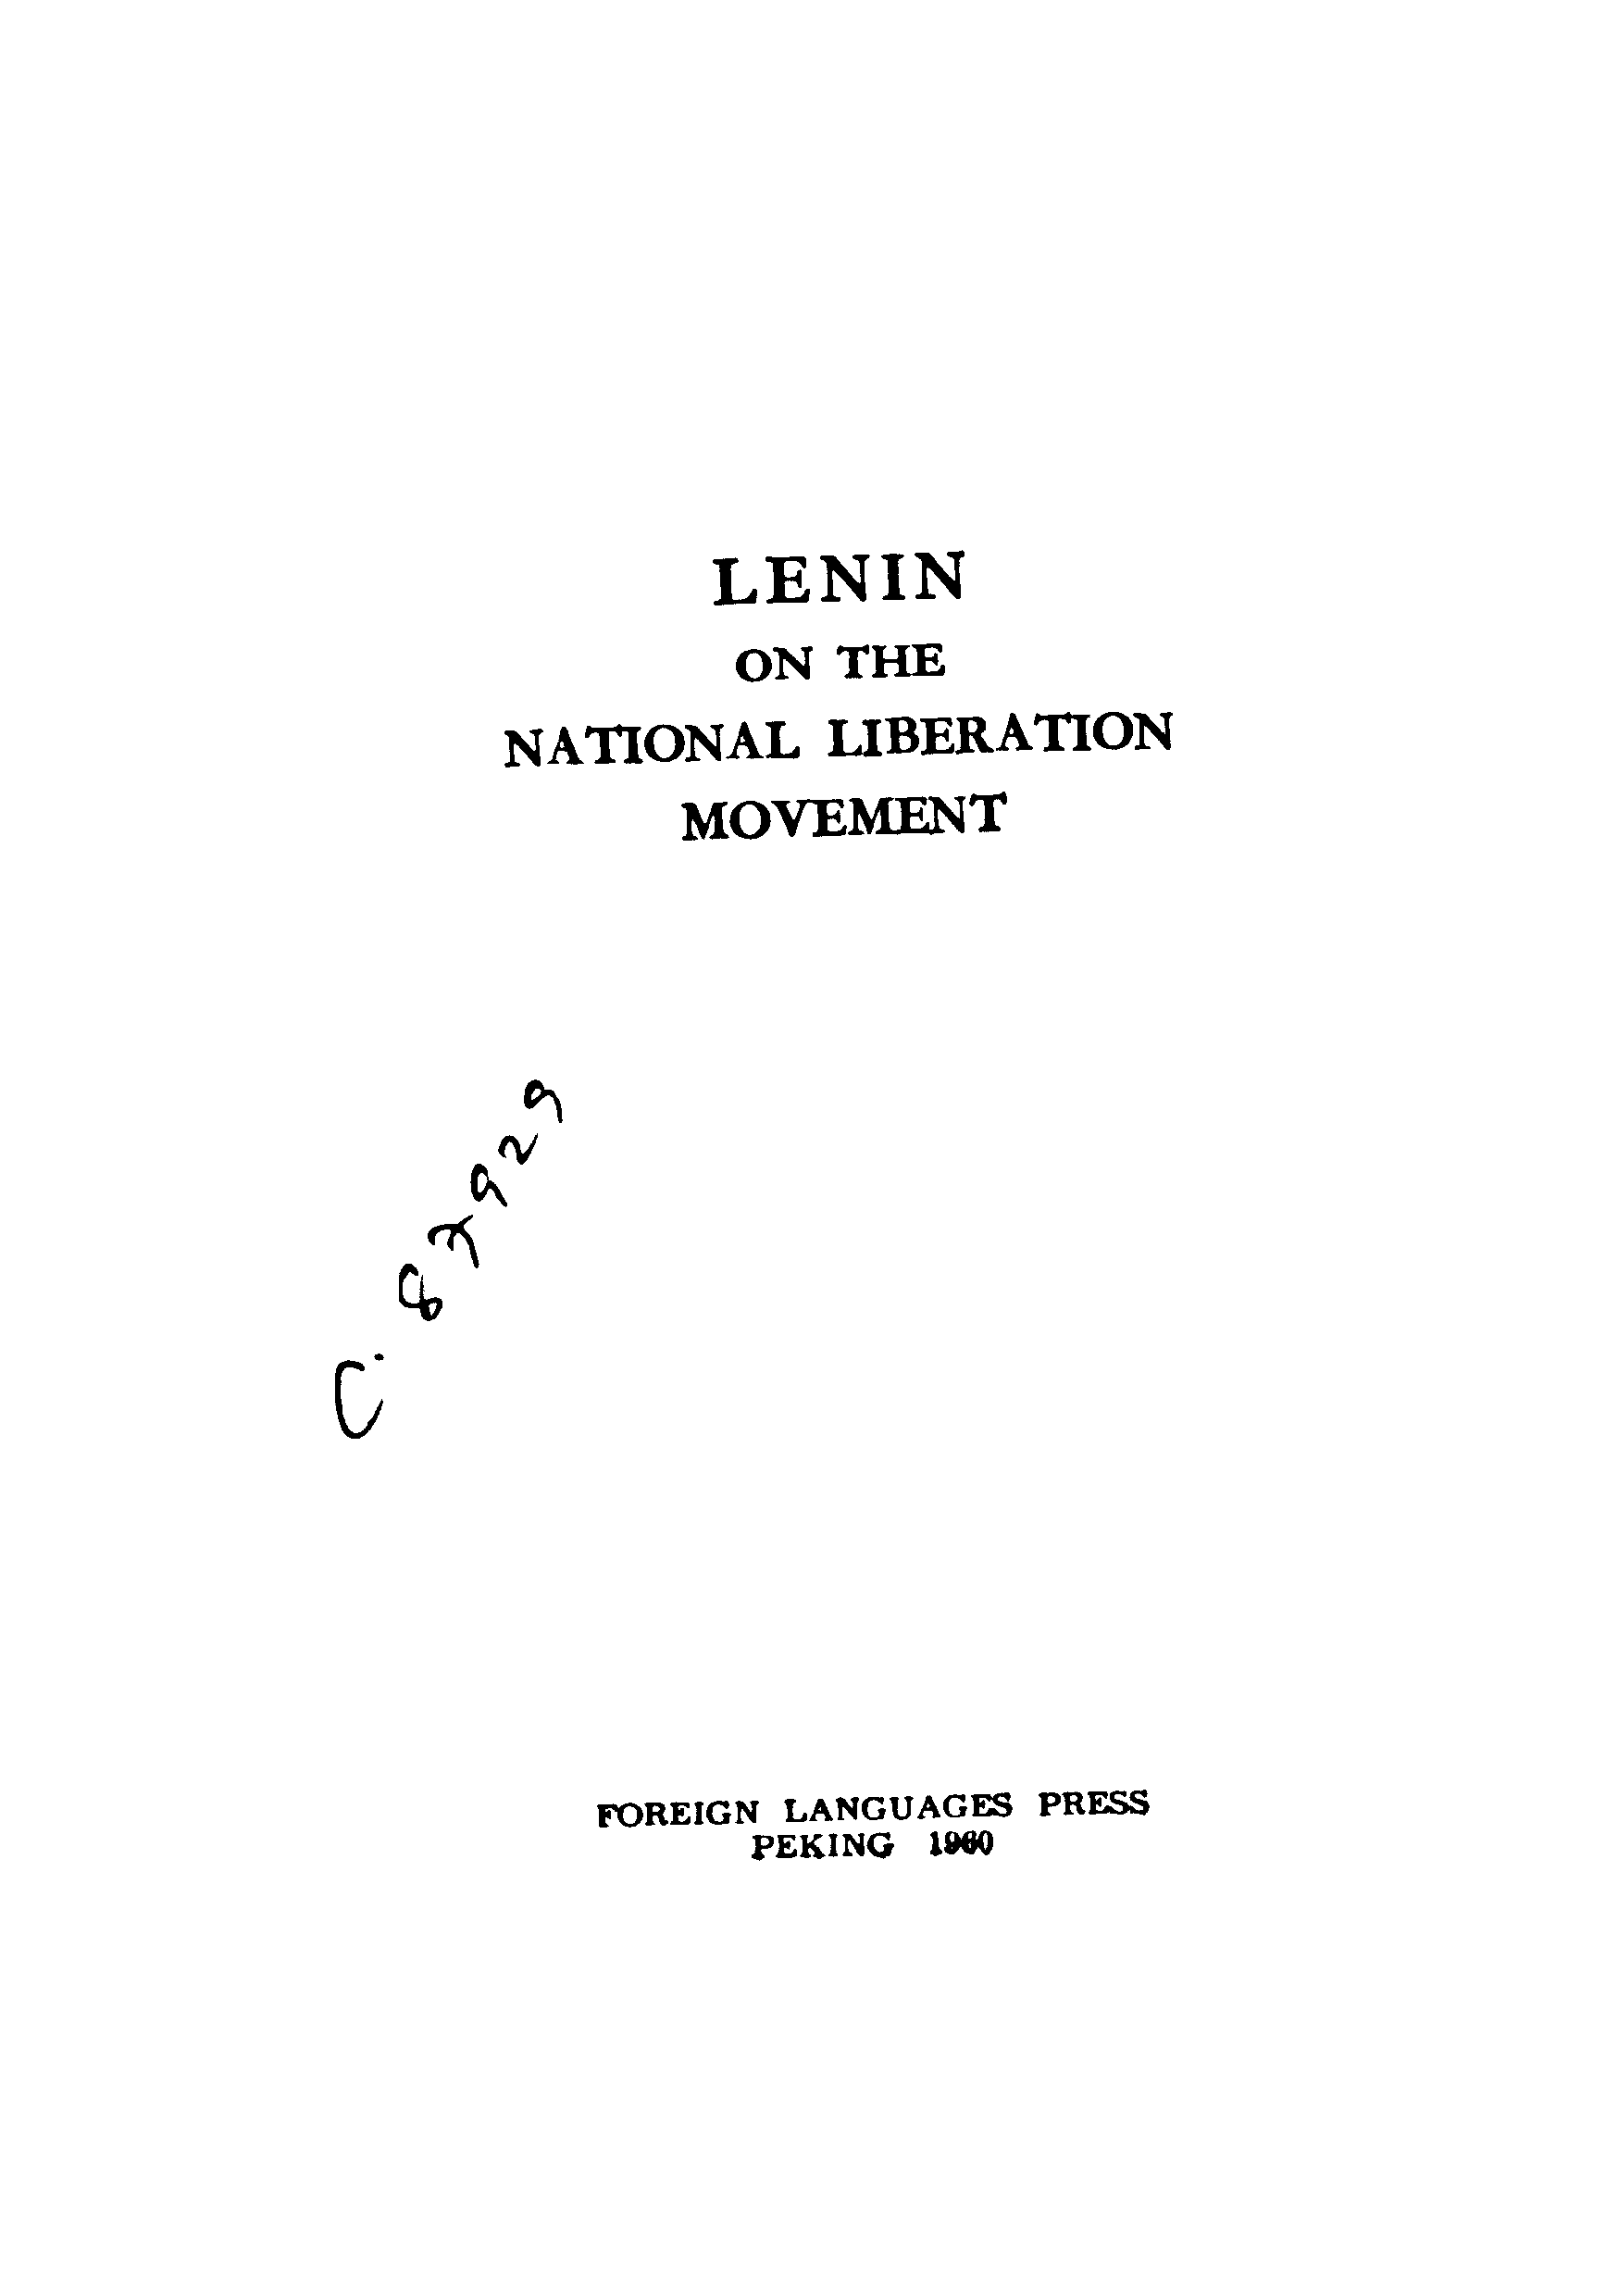 Lenin On The National Liberation Movement